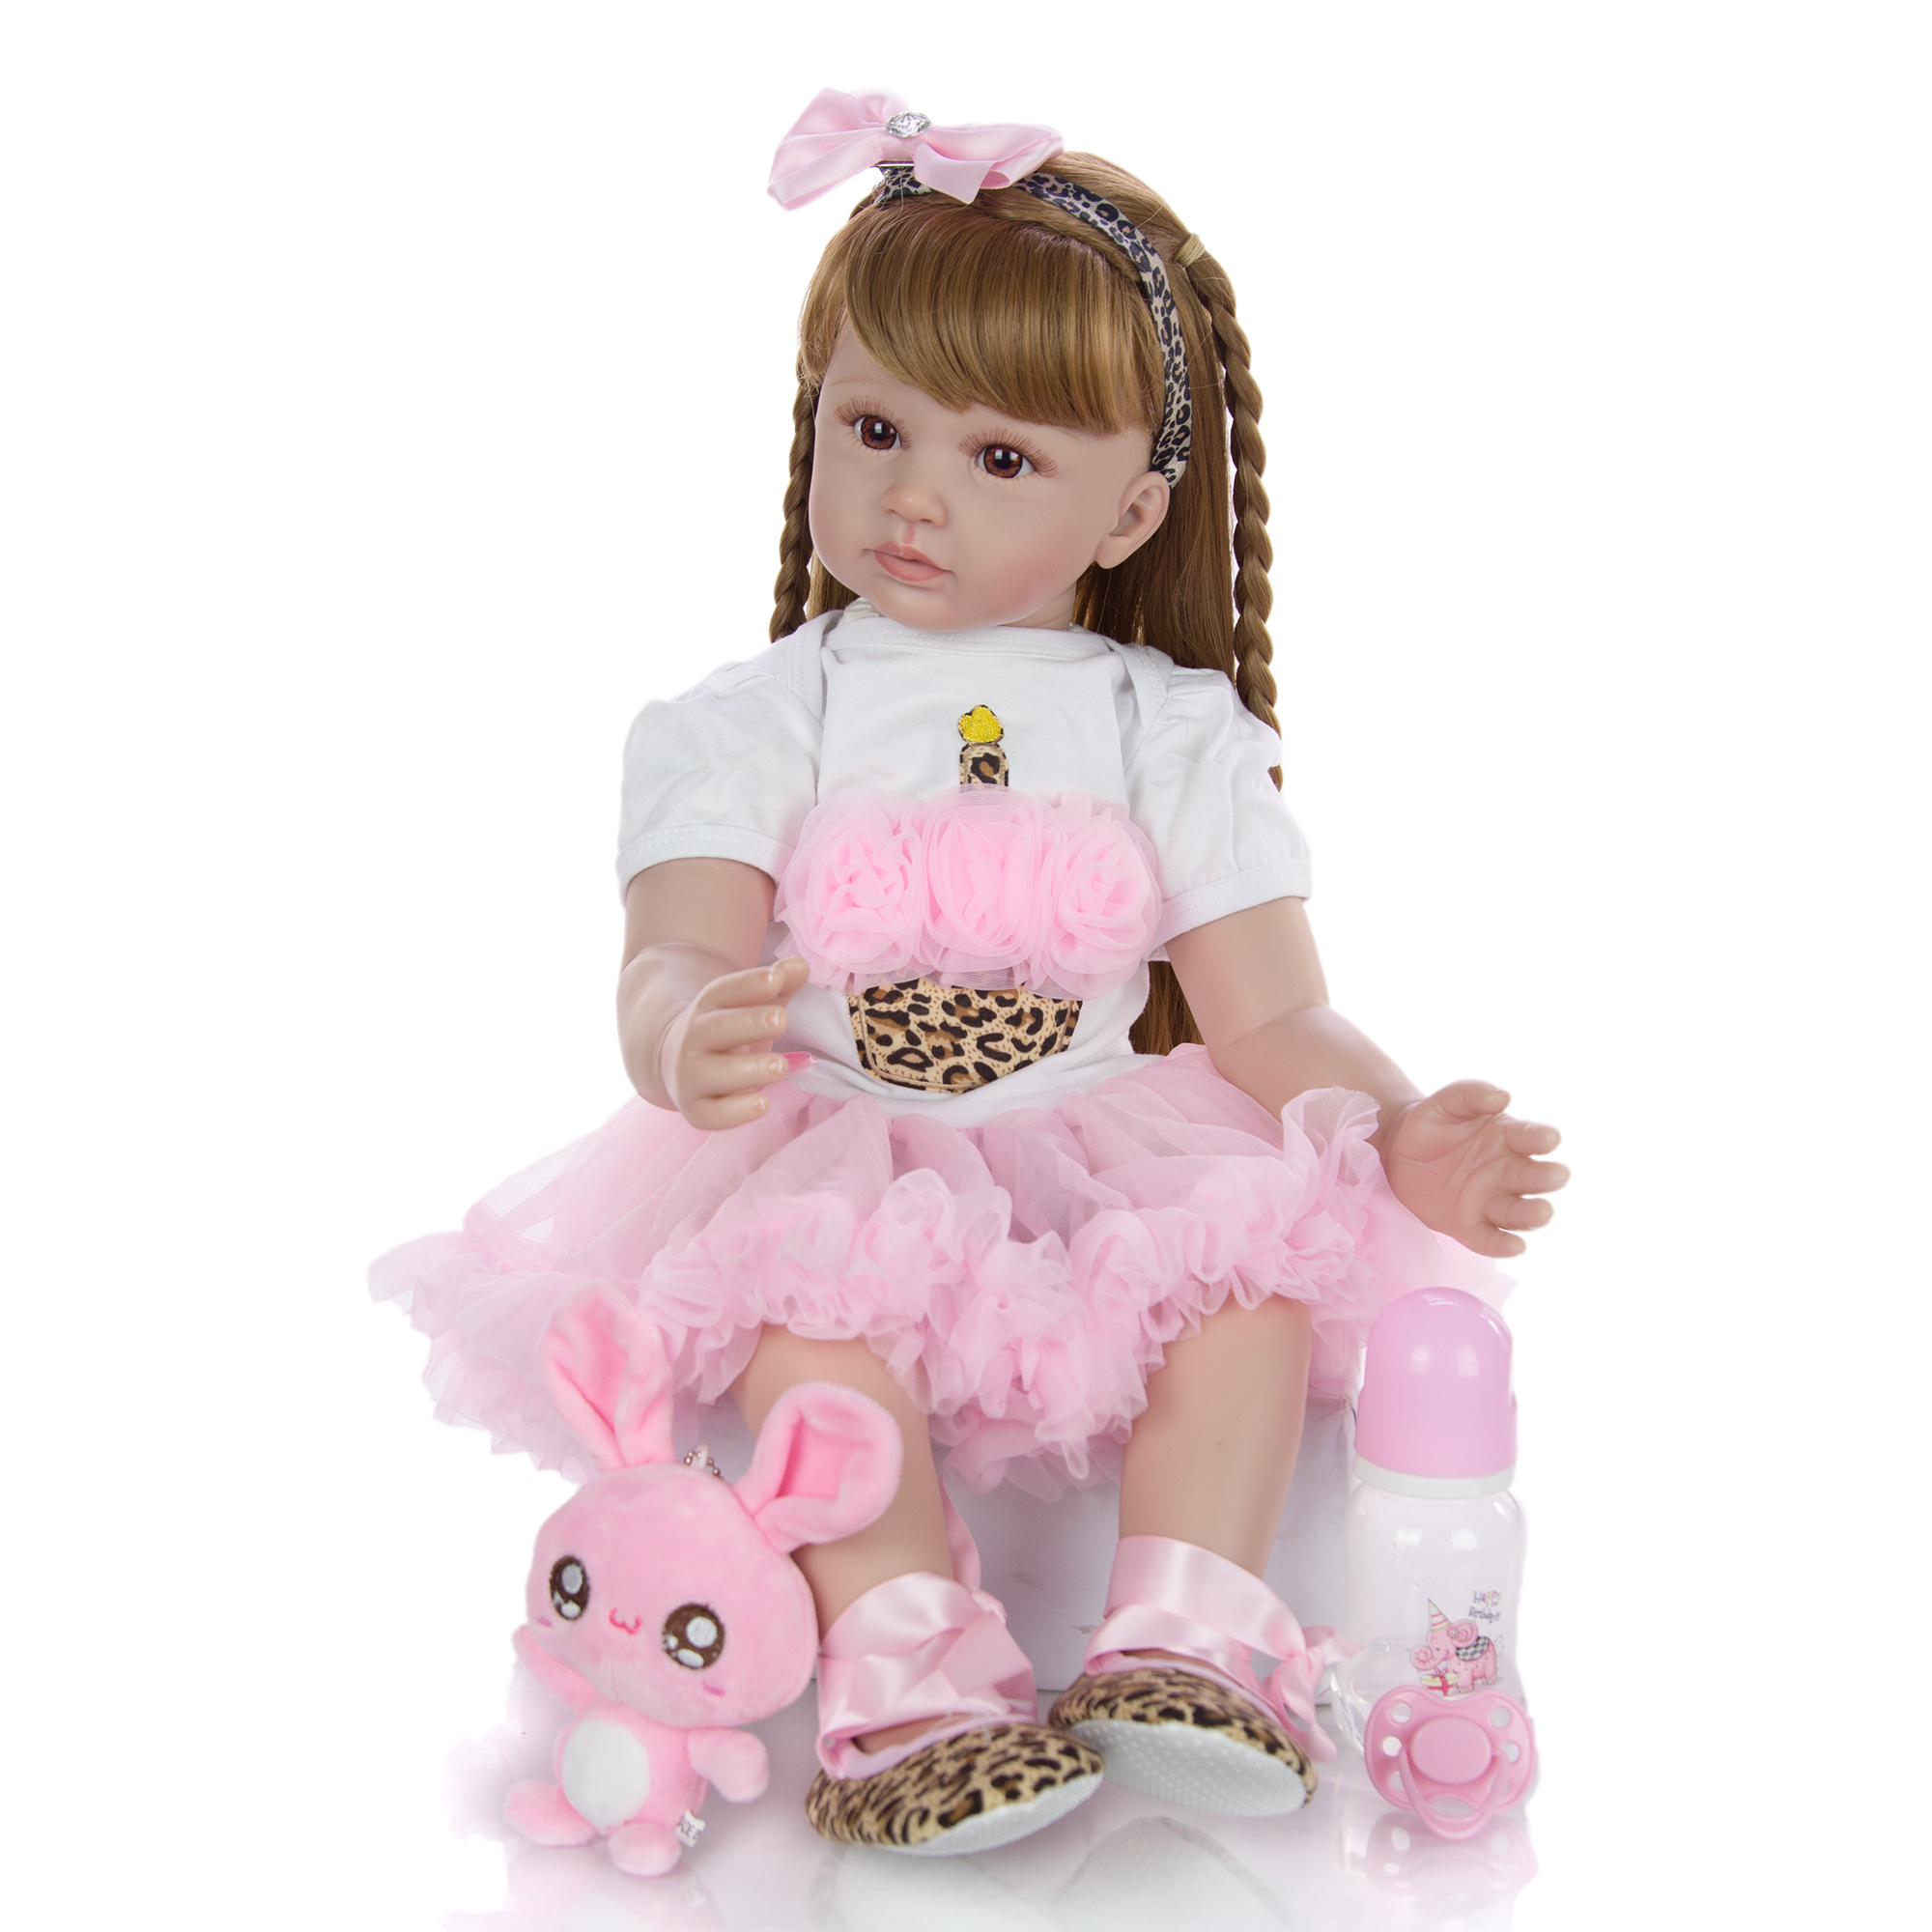 KEIUMI Realistic Newborn Baby Girl 24 Inch Soft Vinyl Cloth Body Bonecas Infantil Menina Baby Doll Toys For Child Birthday Gifts